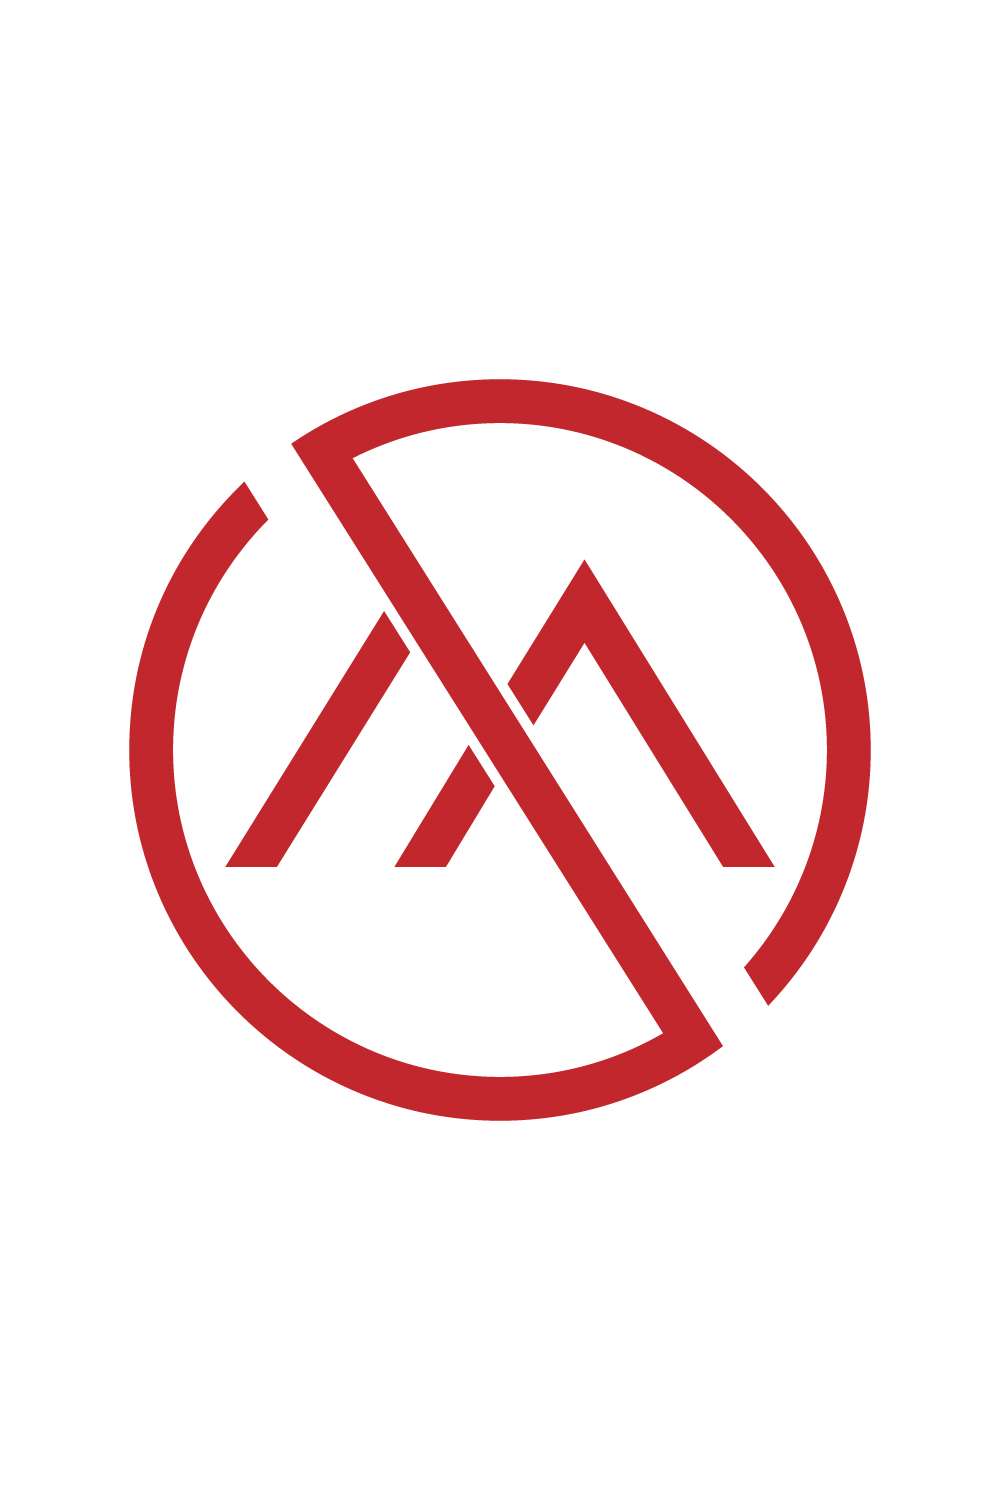 M simple logo design pinterest preview image.